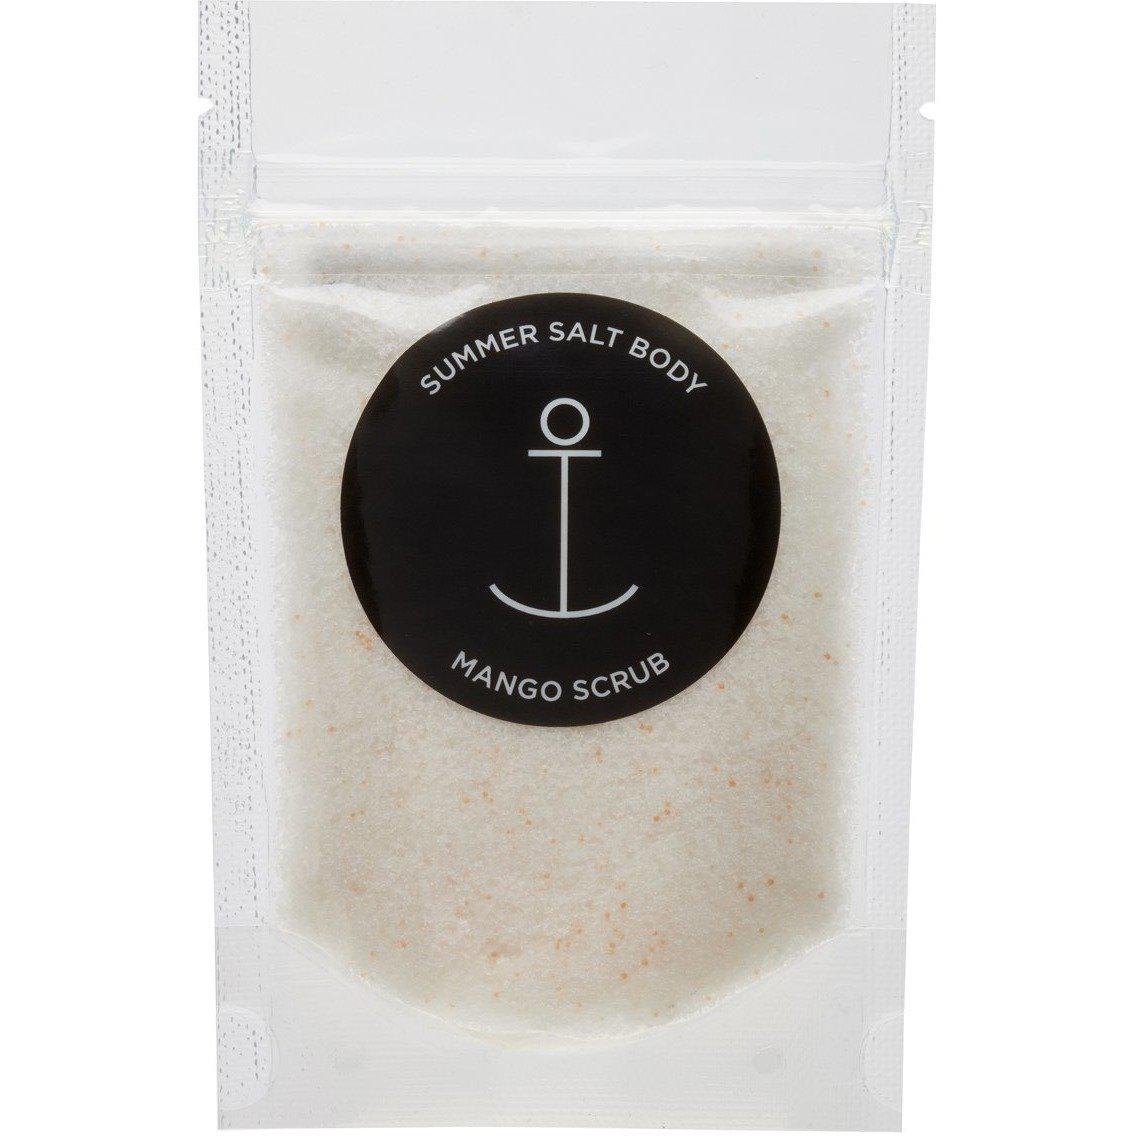 Mini Salt Scrub - 40g-Beauty & Well-Being-Summer Salt Body-Mango-The Bay Room